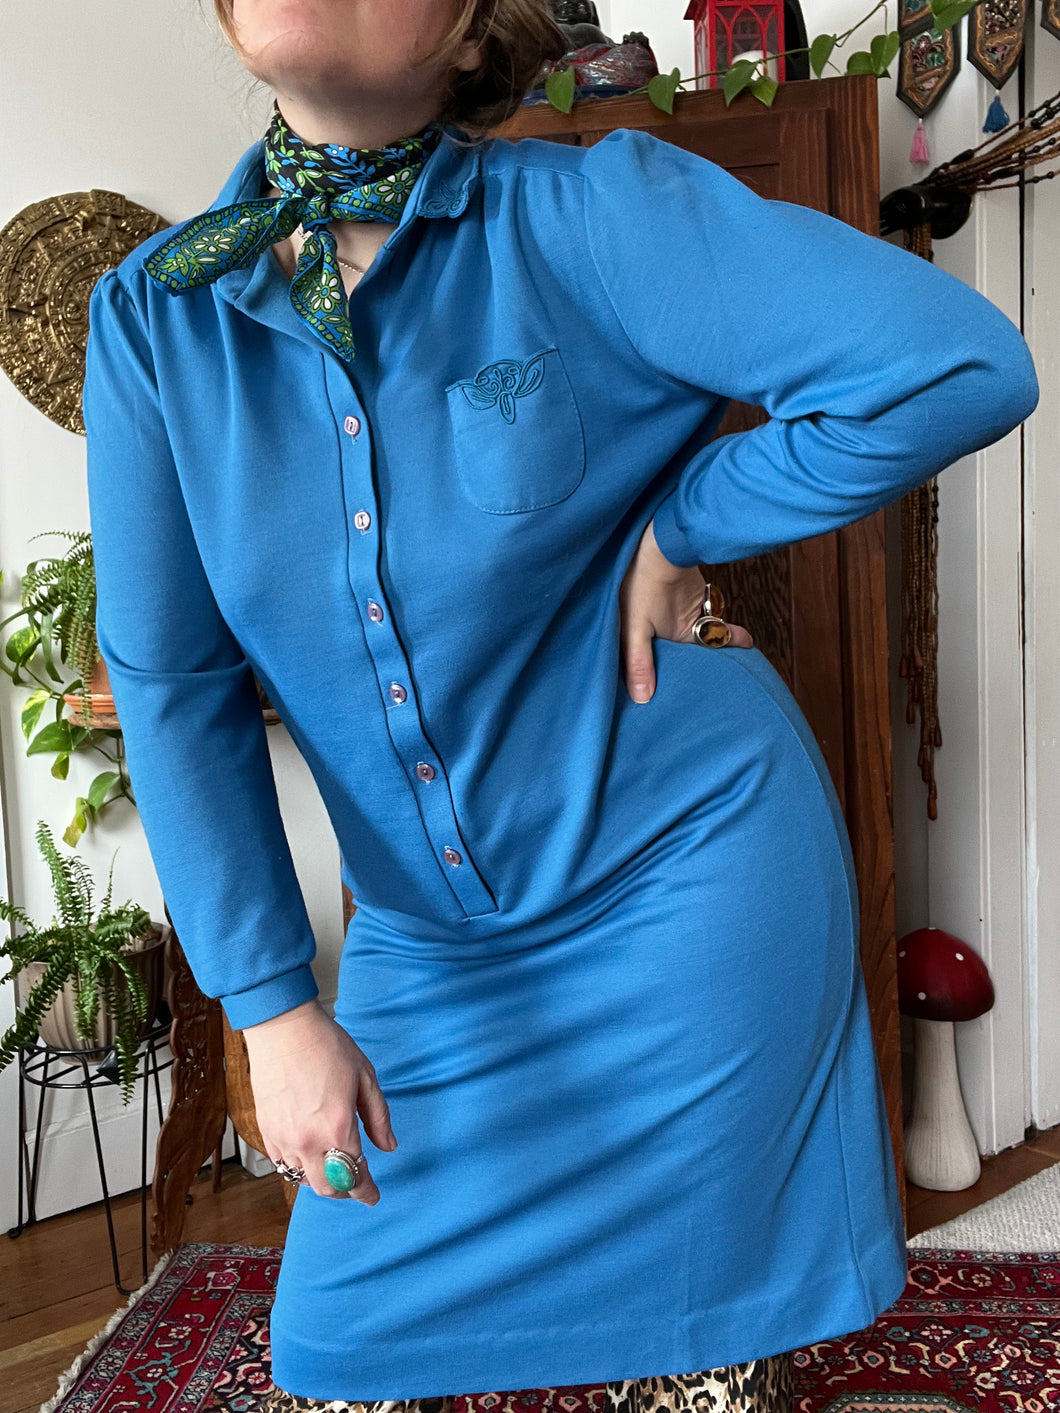 Vintage 70's Sky Blue Mid-Length Tunic Dress (Large)